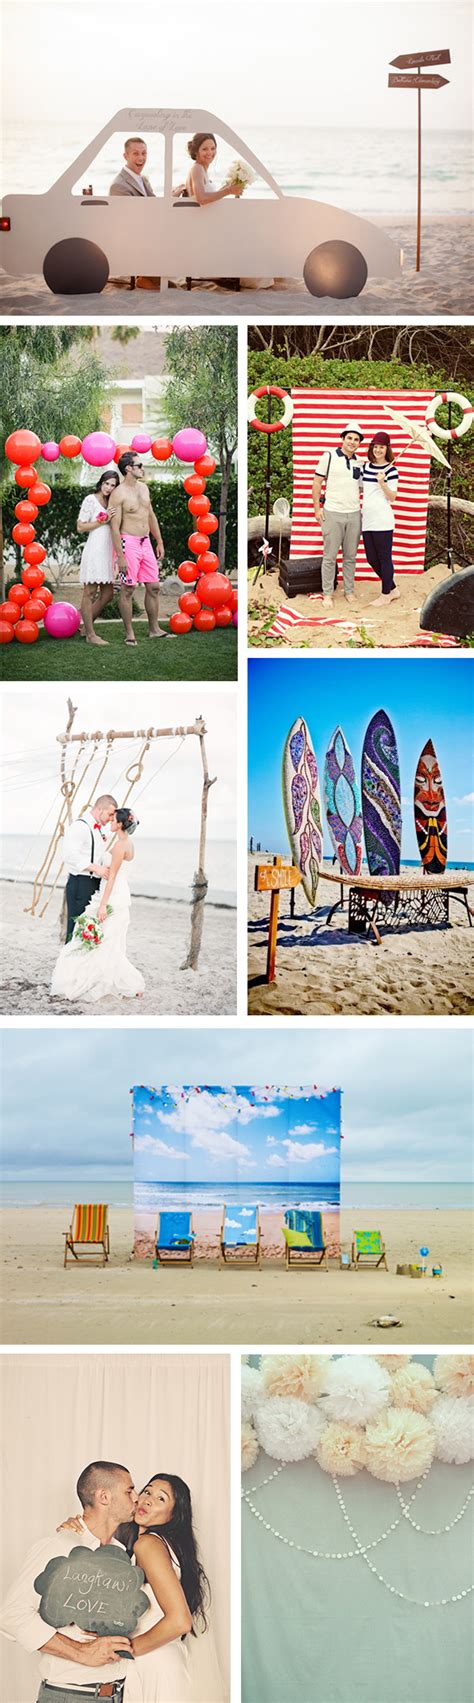 Creative Beach Wedding Photo Booth Ideas The Destination Wedding Blog